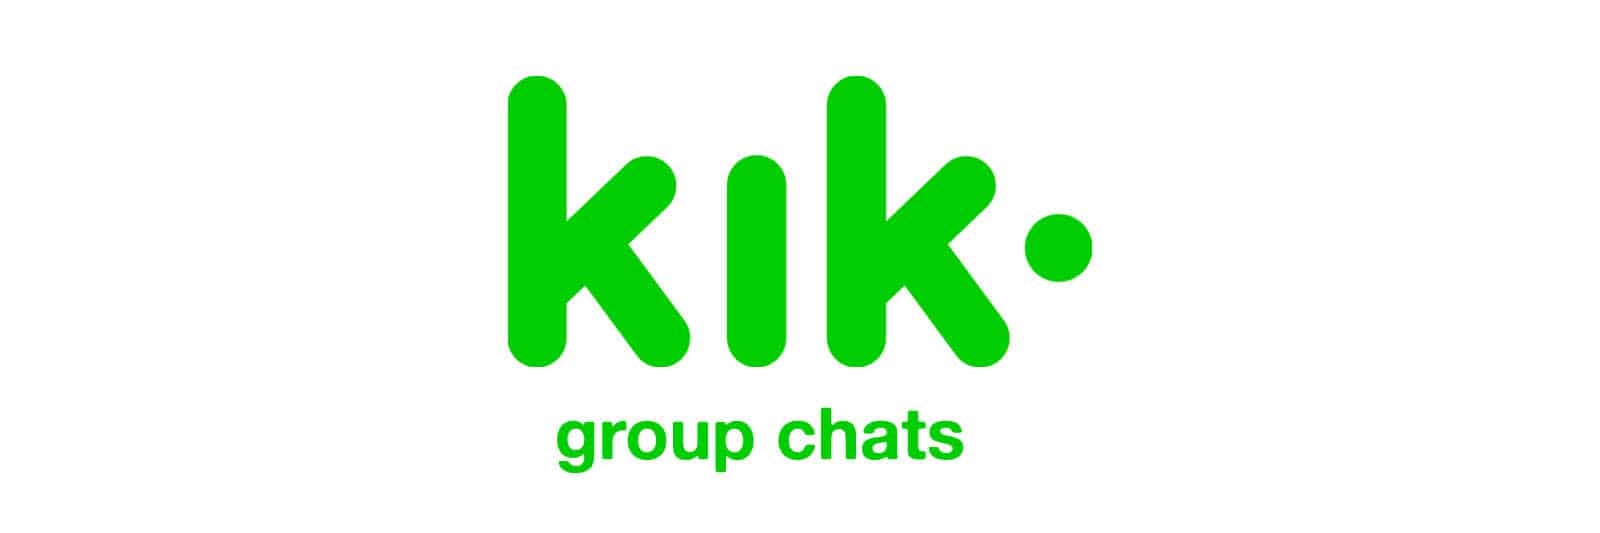 darren wan recommends bi kik group chats pic